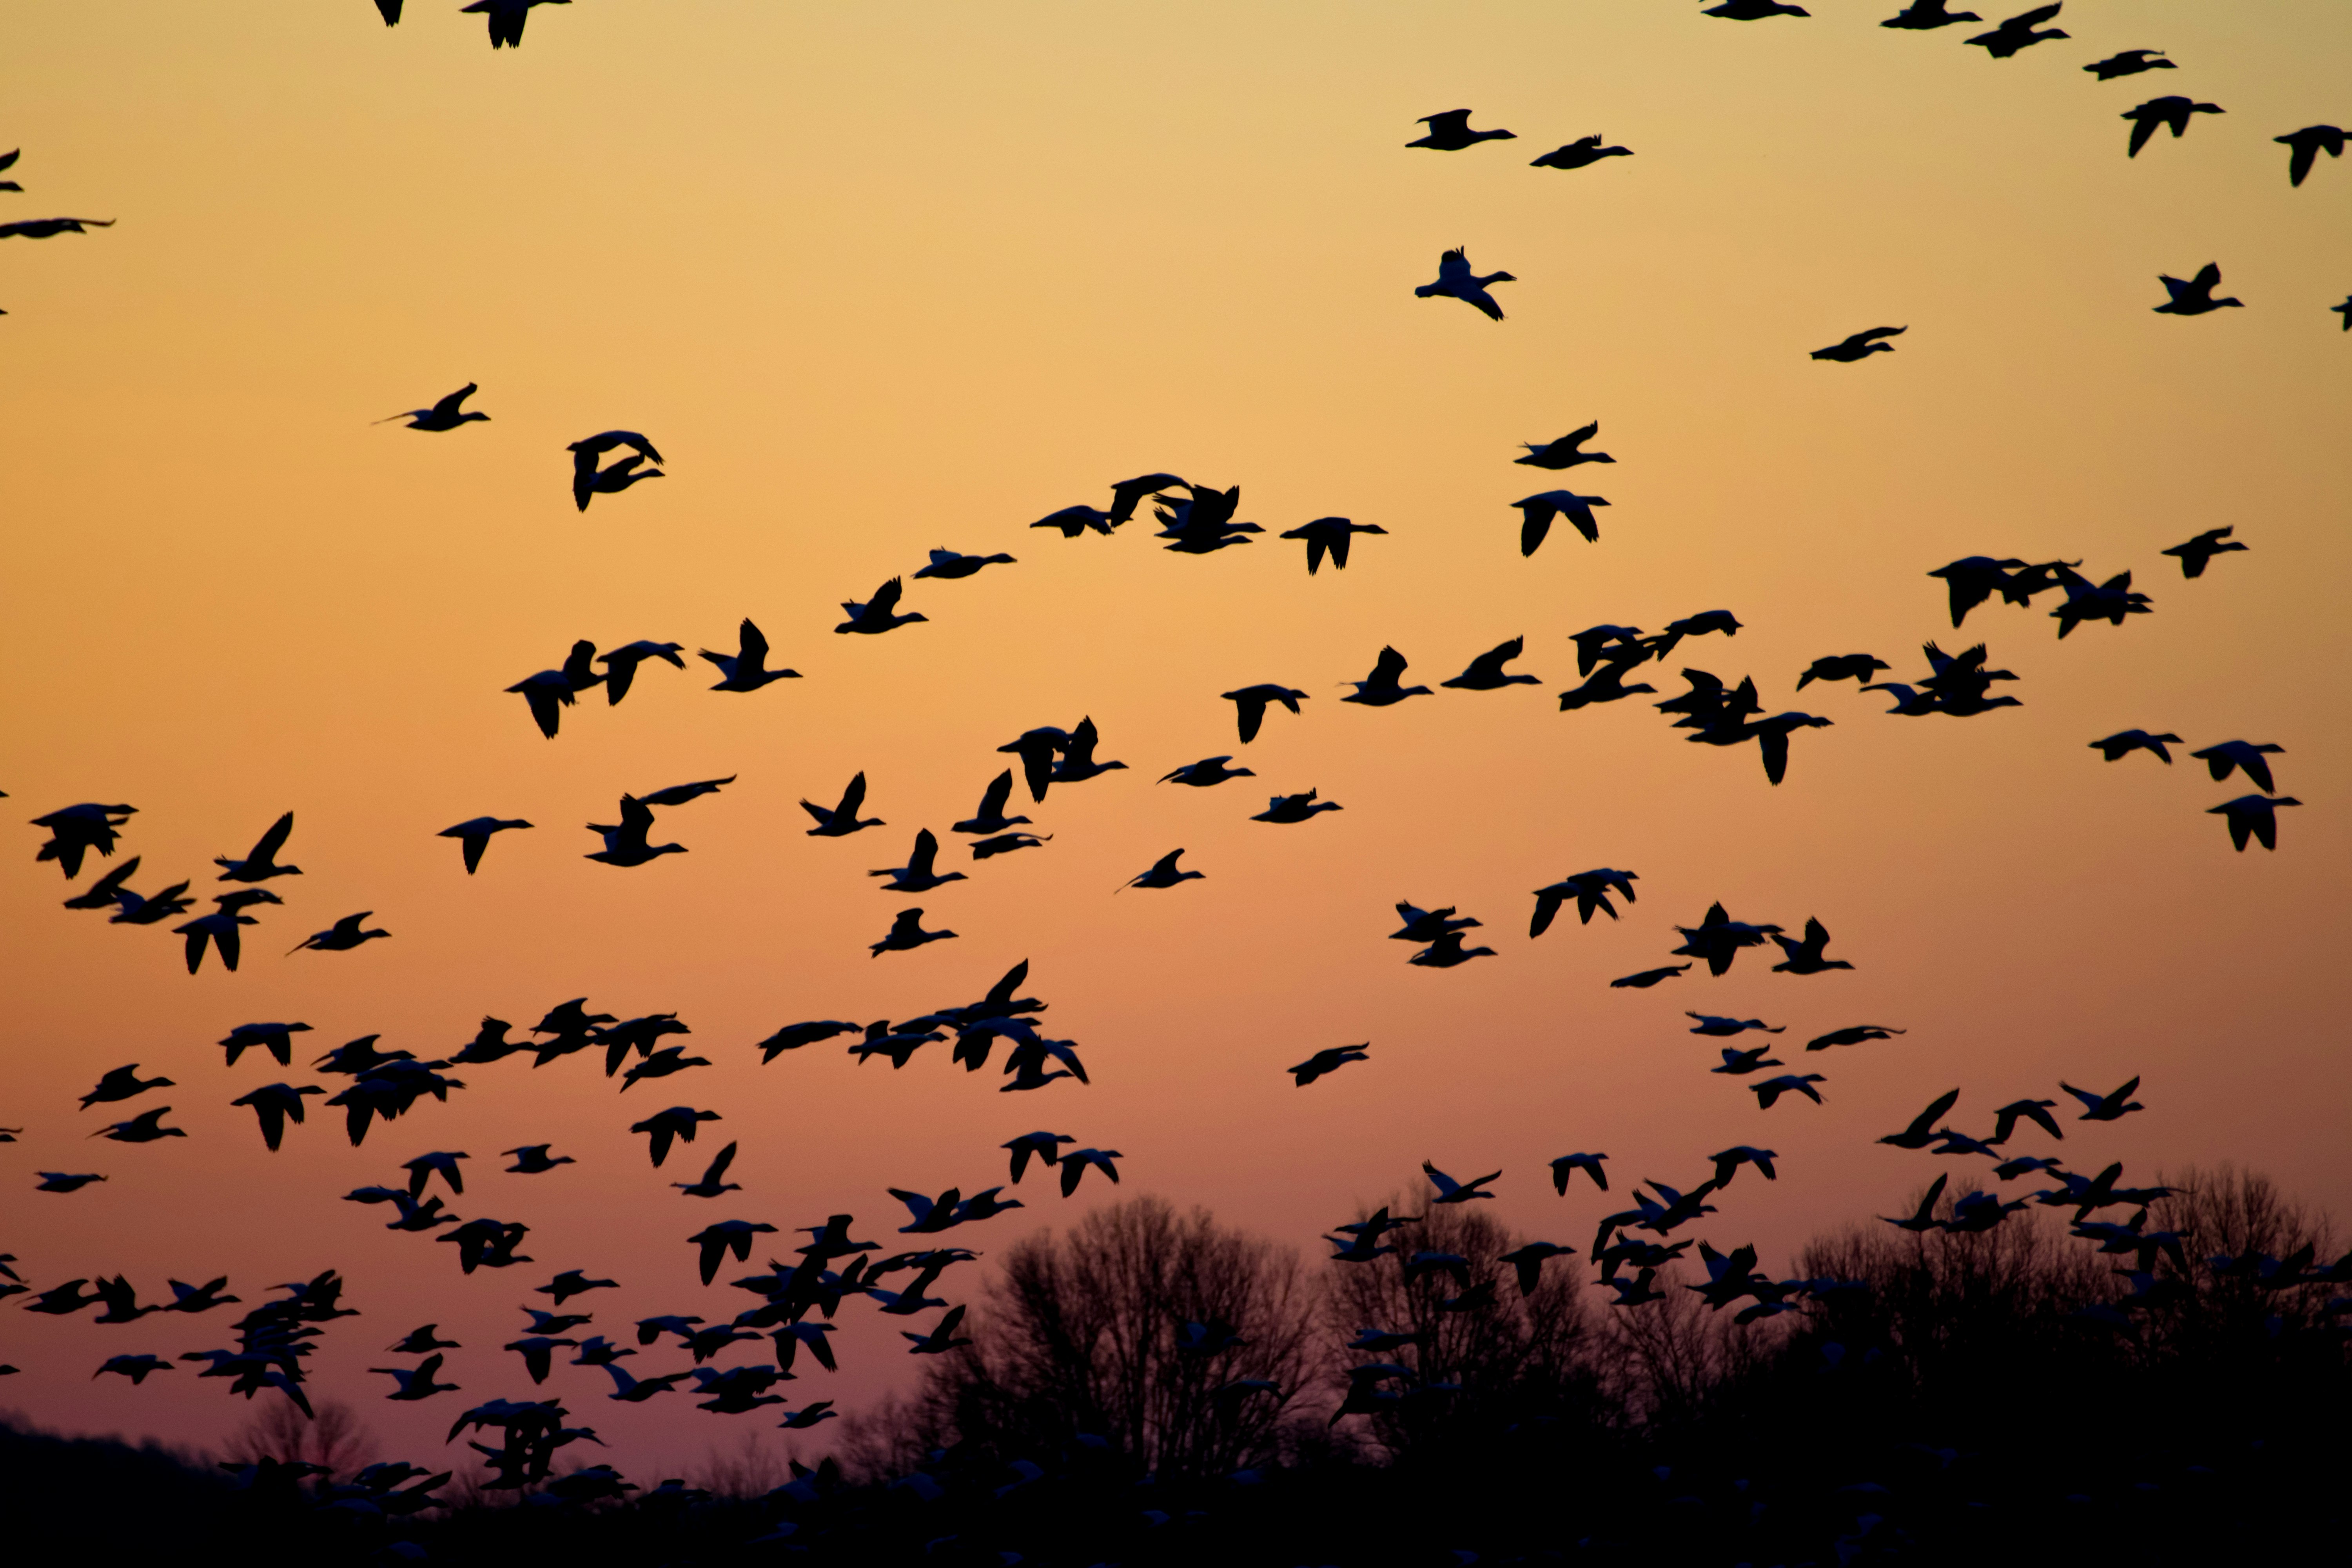 Flock of birds. Стая птиц. Стая птиц в небе. Птица летит. Много птиц в небе.